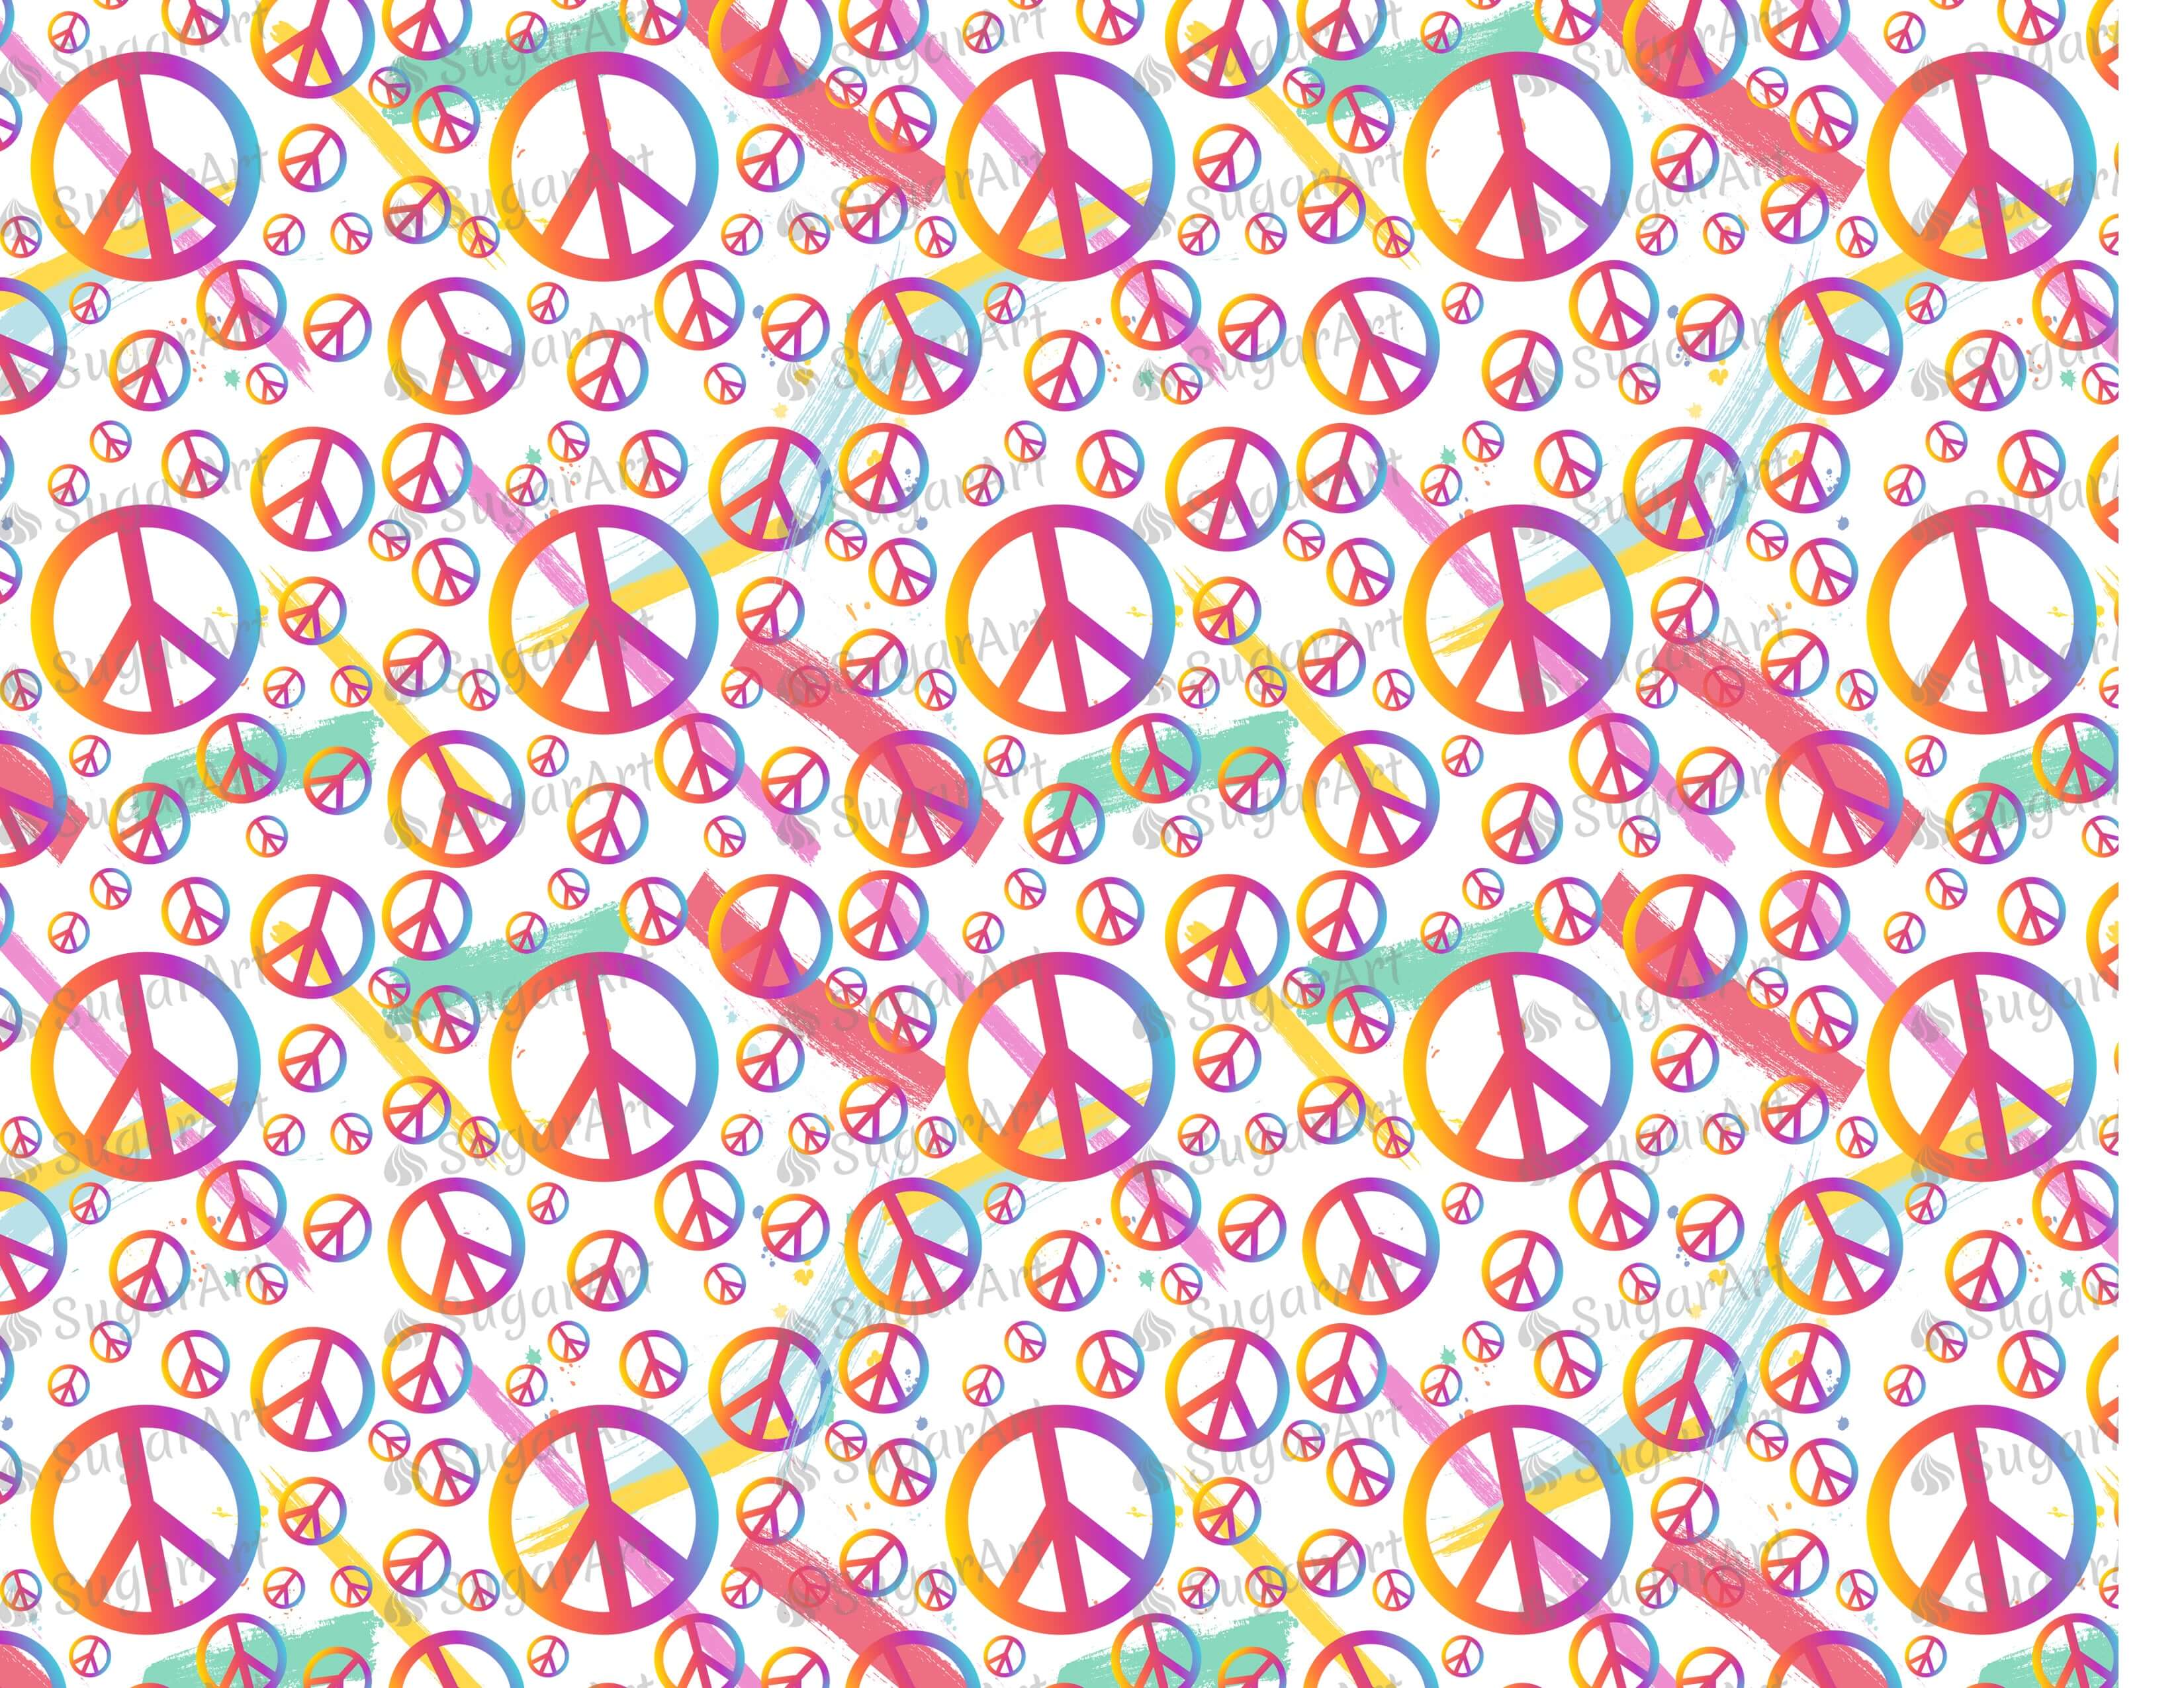 Colorful Peace Symbols Background - Icing - ISA097.